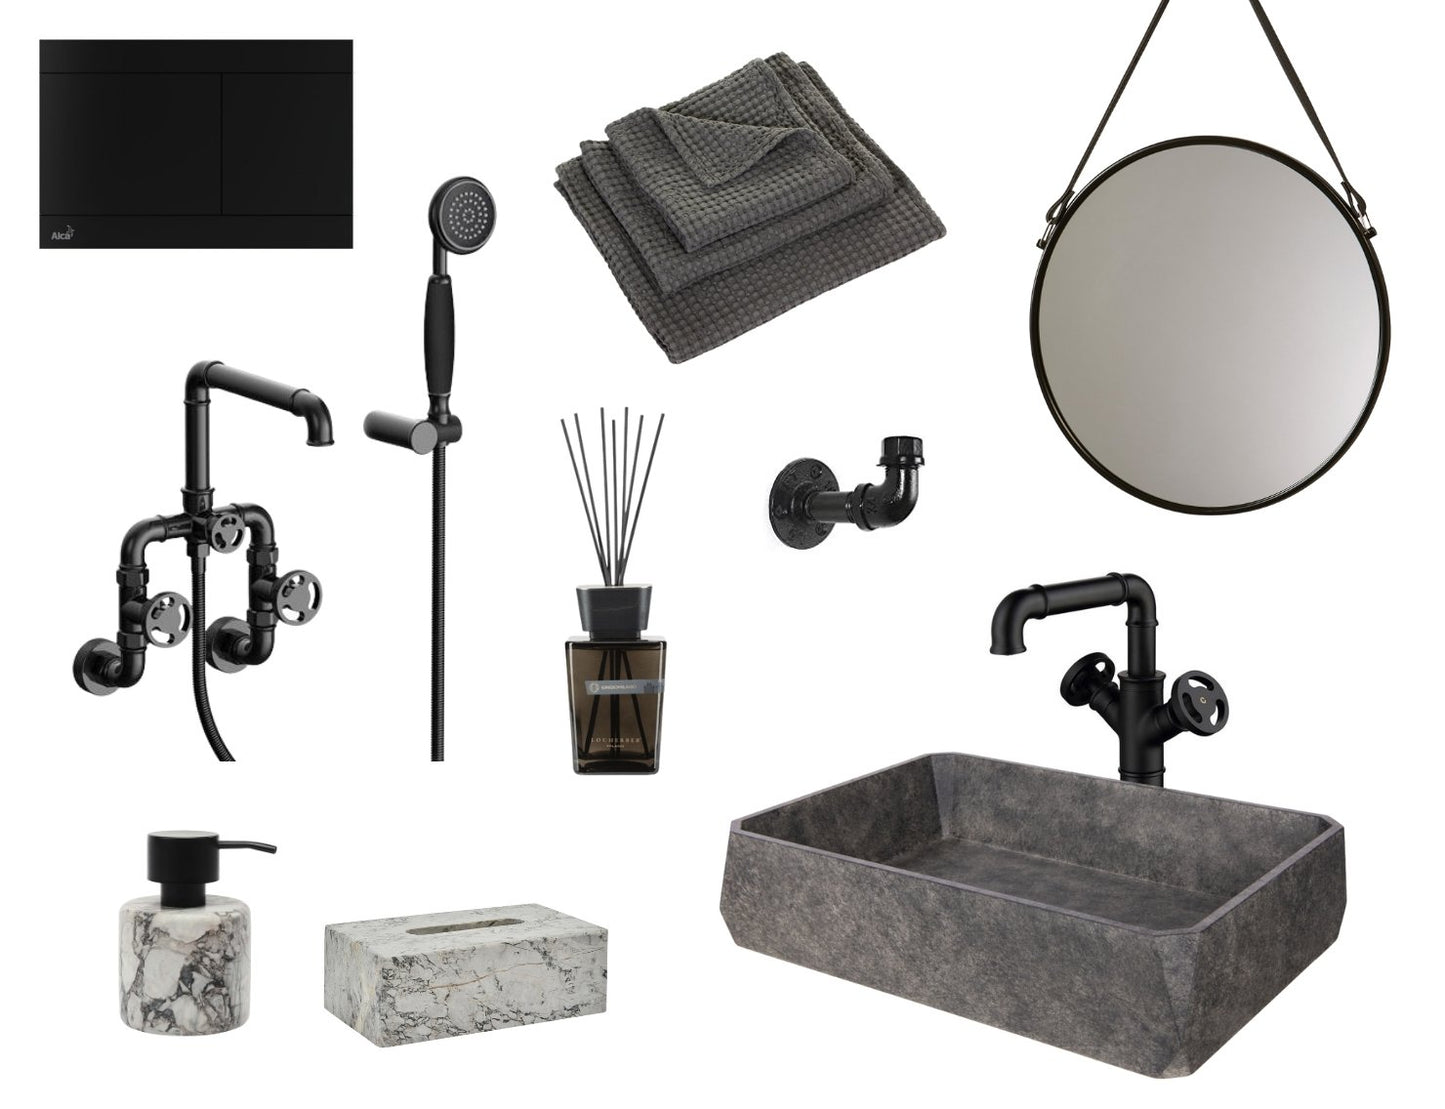 Industrial Black Angle Valve - |VESIMI Design| Luxury and Rustic bathrooms online